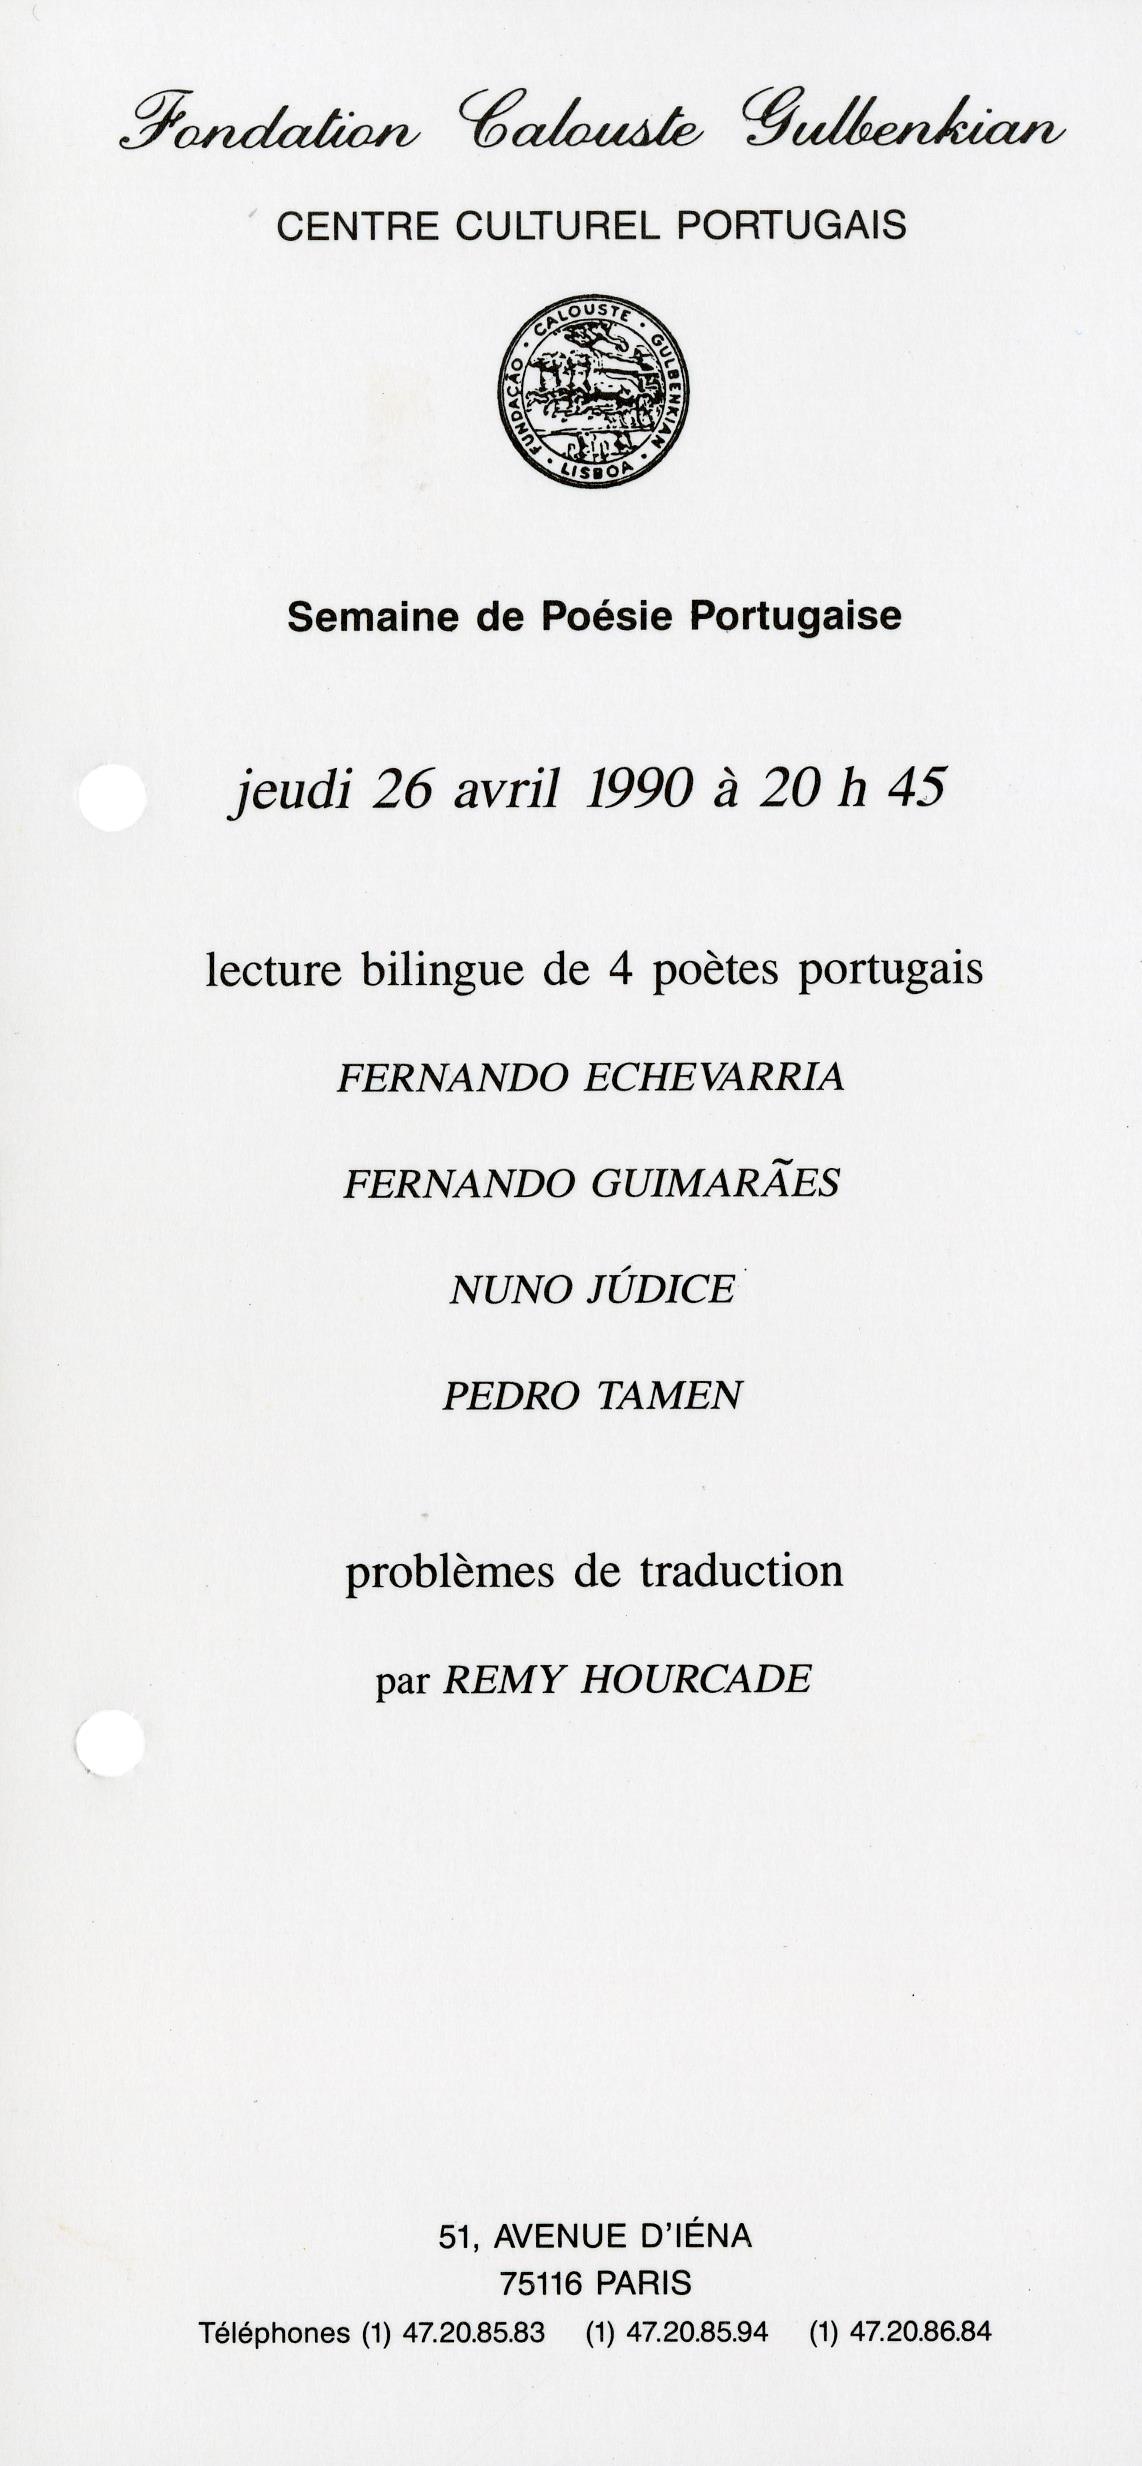 Semaine de Poésie Portugaise. Recital de Poesia